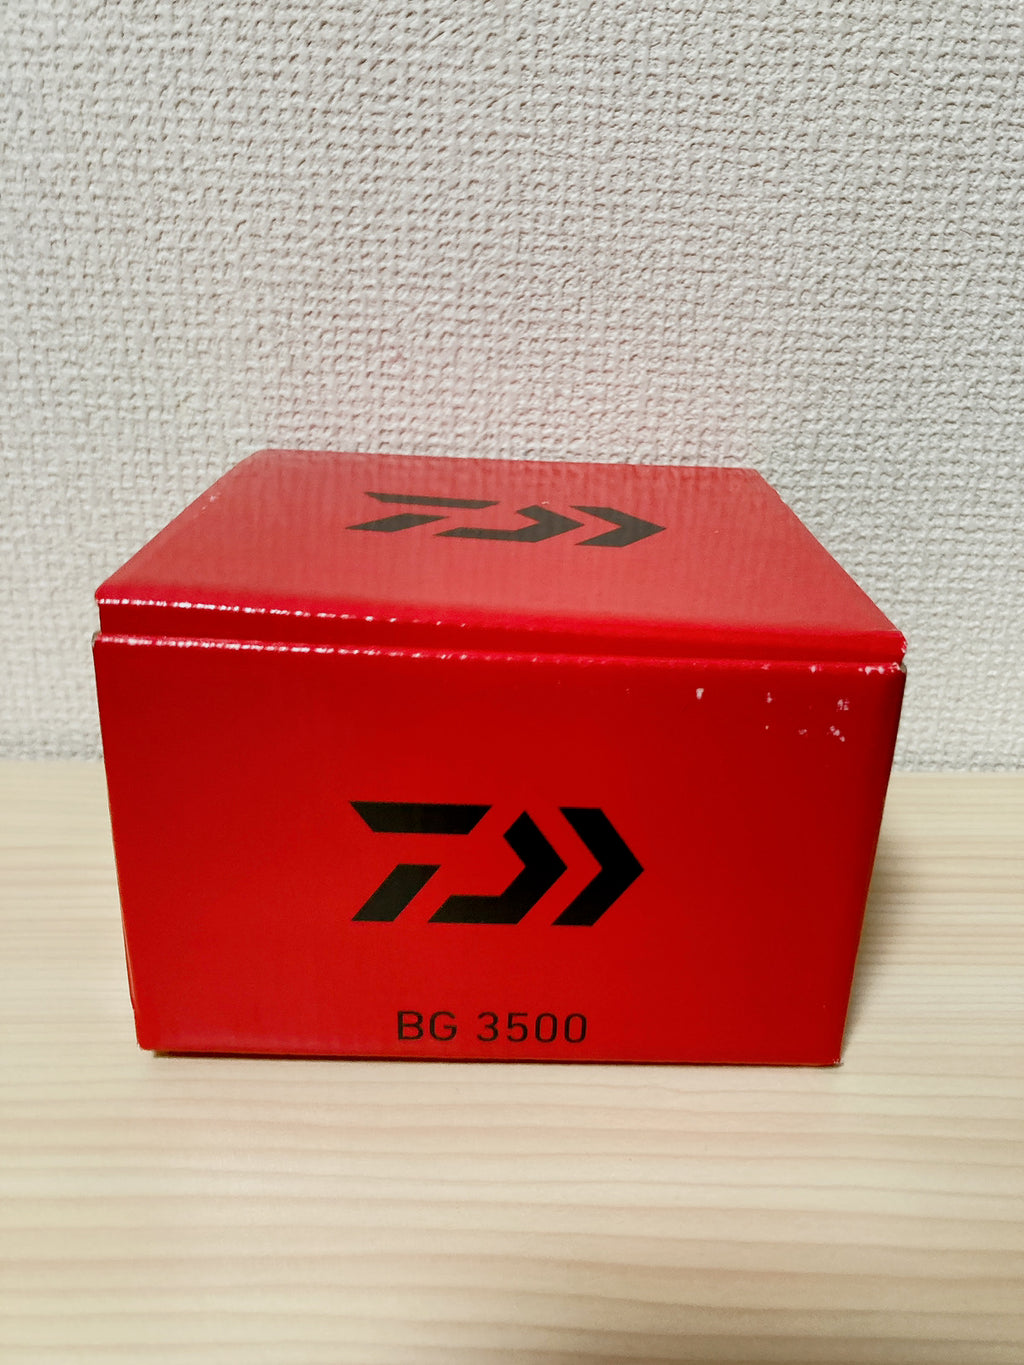 DAIWA SAMURAI 3500 SPINNING REEL, NEW IN THE BOX - Berinson Tackle Company